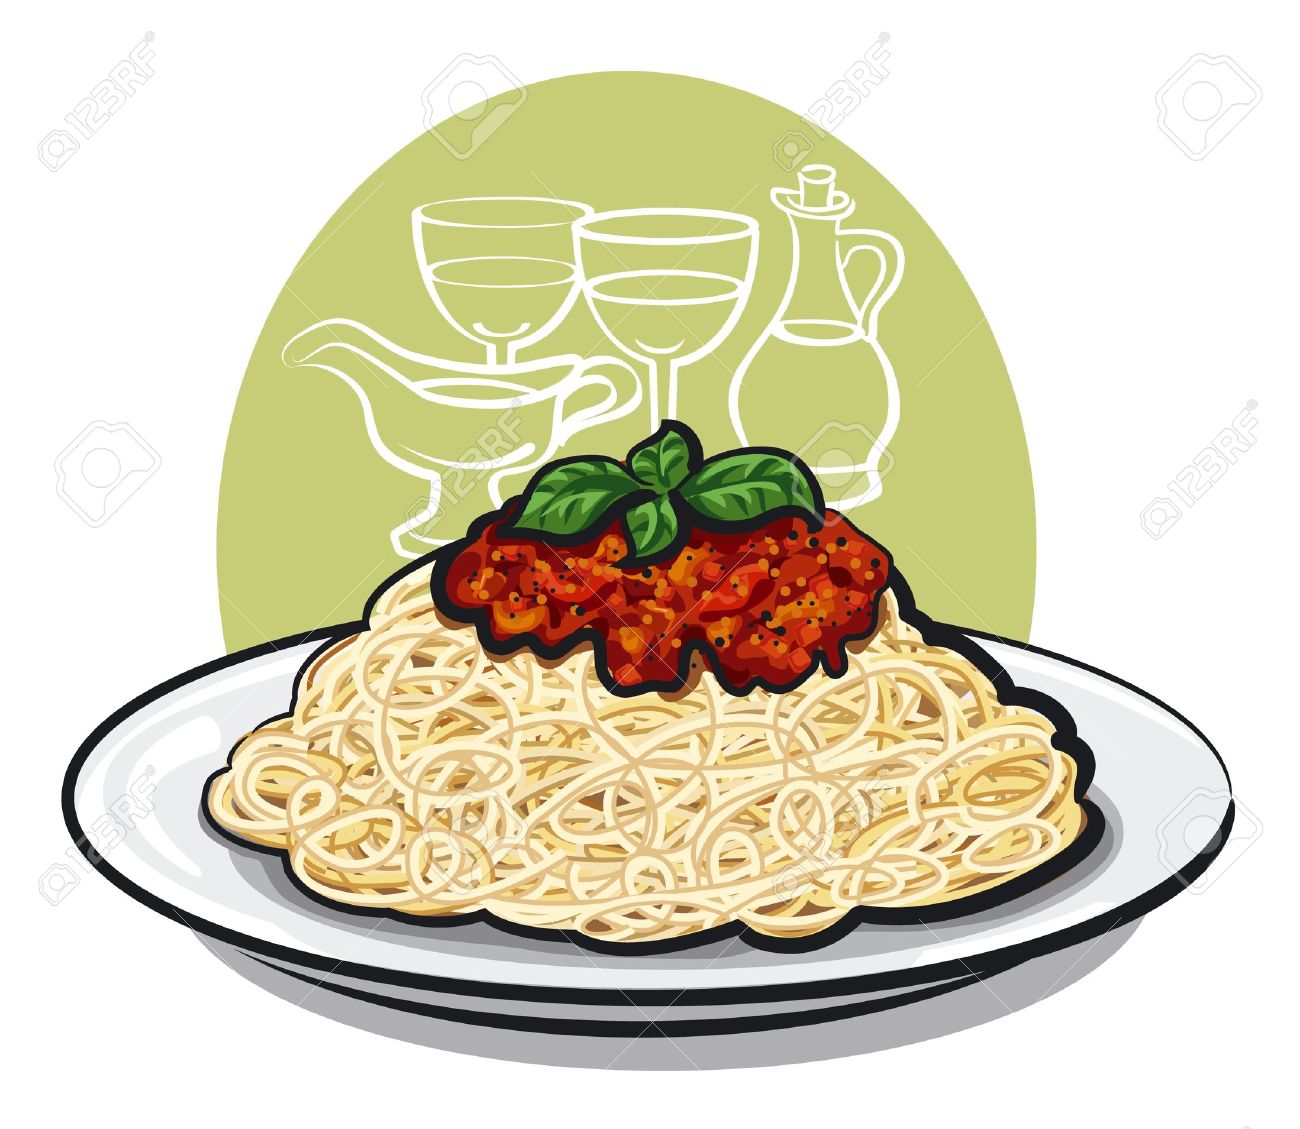 18903939-Spaghetti-bolognese-Stock-Vector-spaghetti-pasta-lunch.jpg